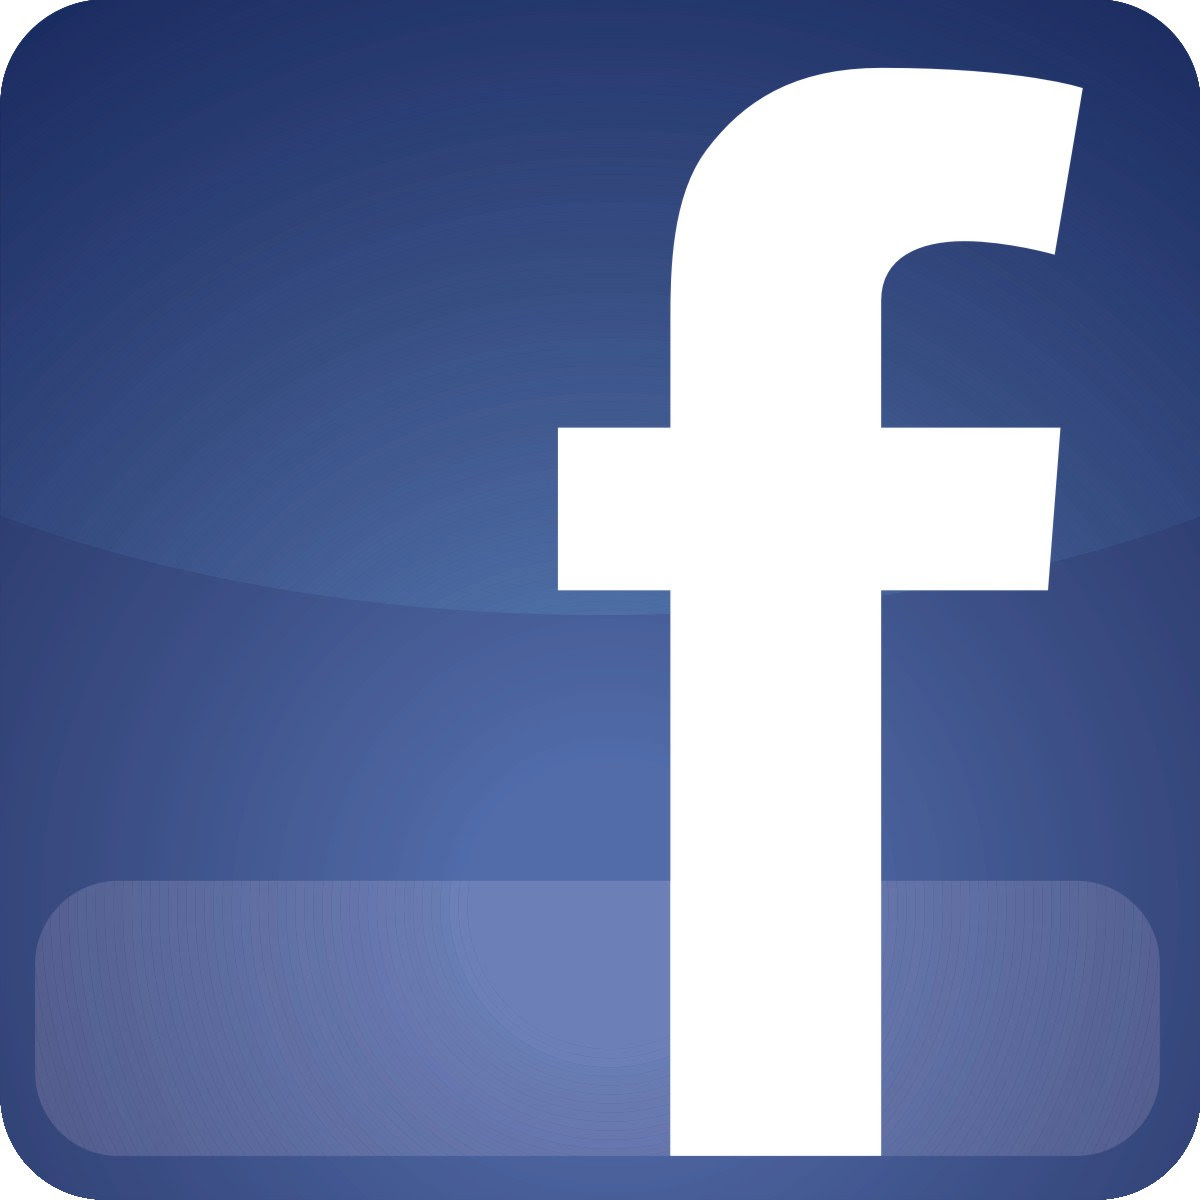 facebook-logo-1.jpg